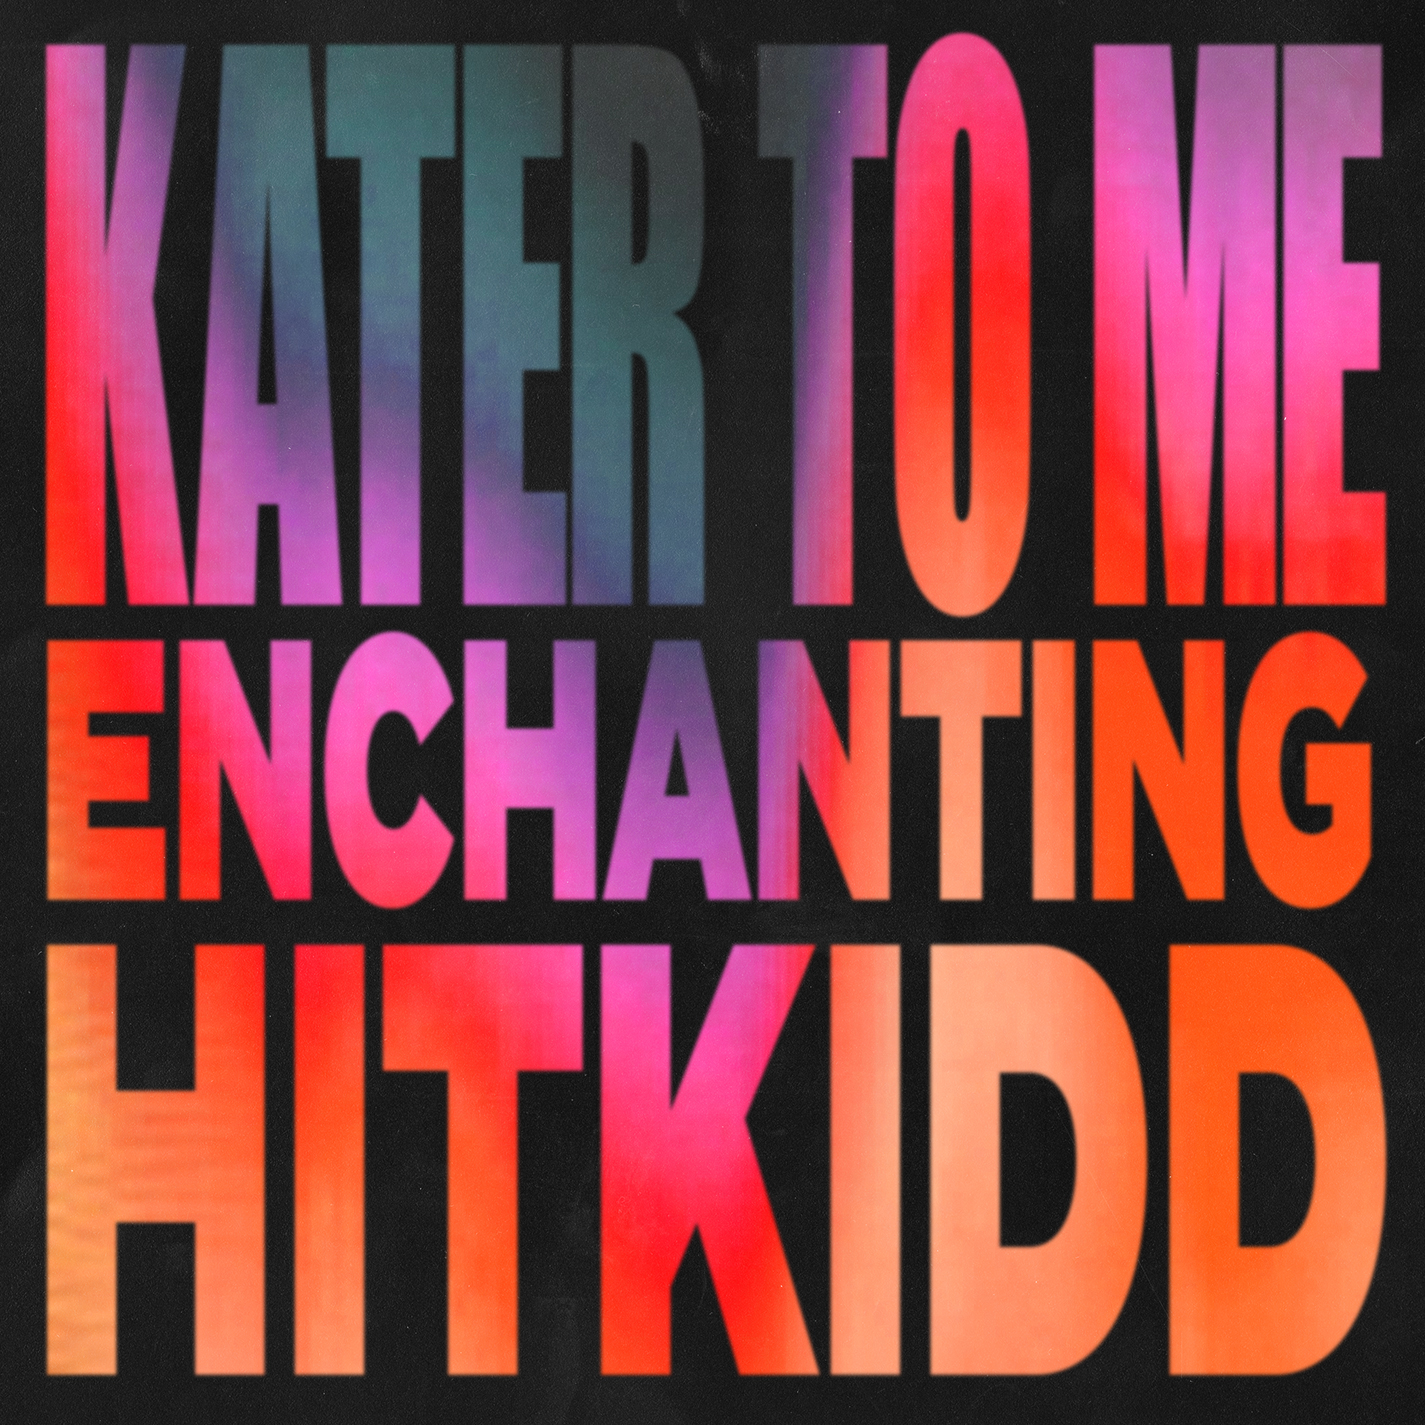 Enchanting, Hitkidd - Kater To Me album image